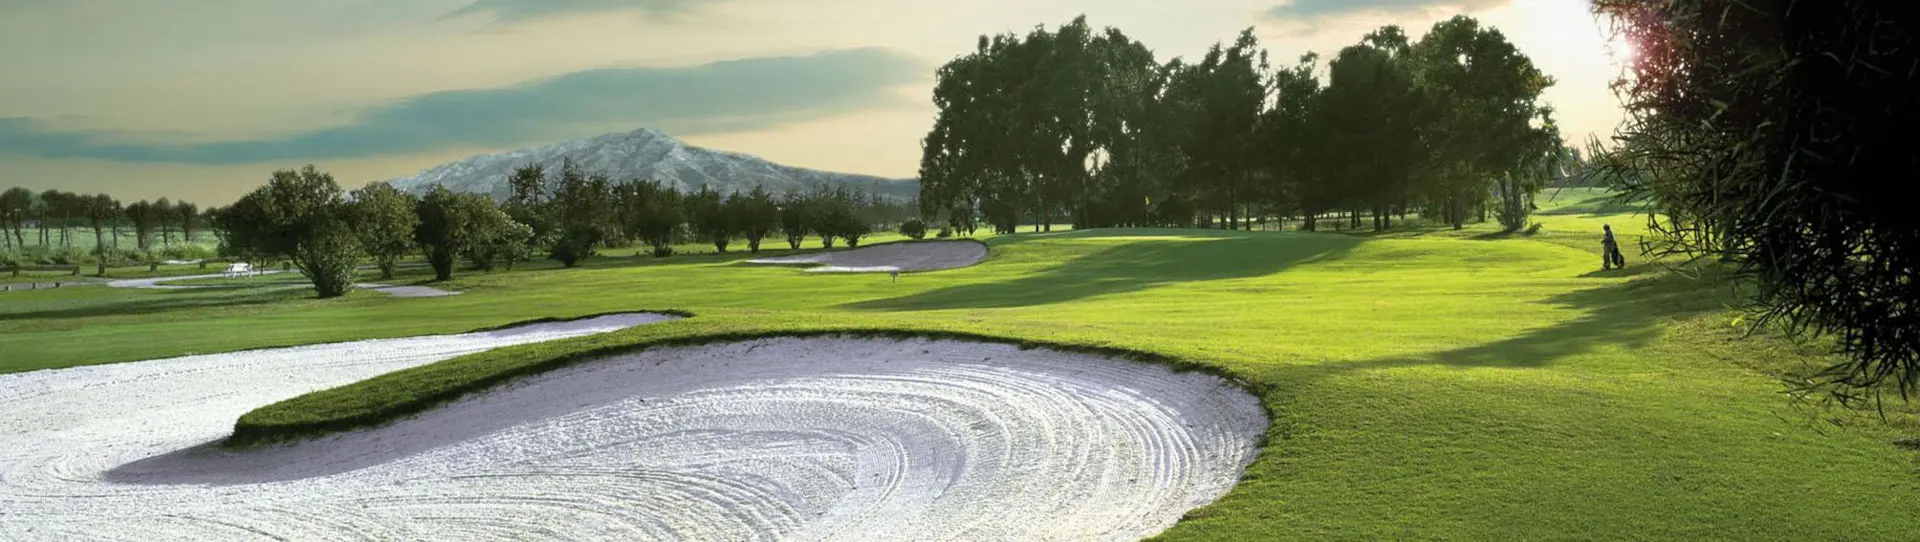 Spain golf courses - Atalaya Golf Old Course - Photo 2